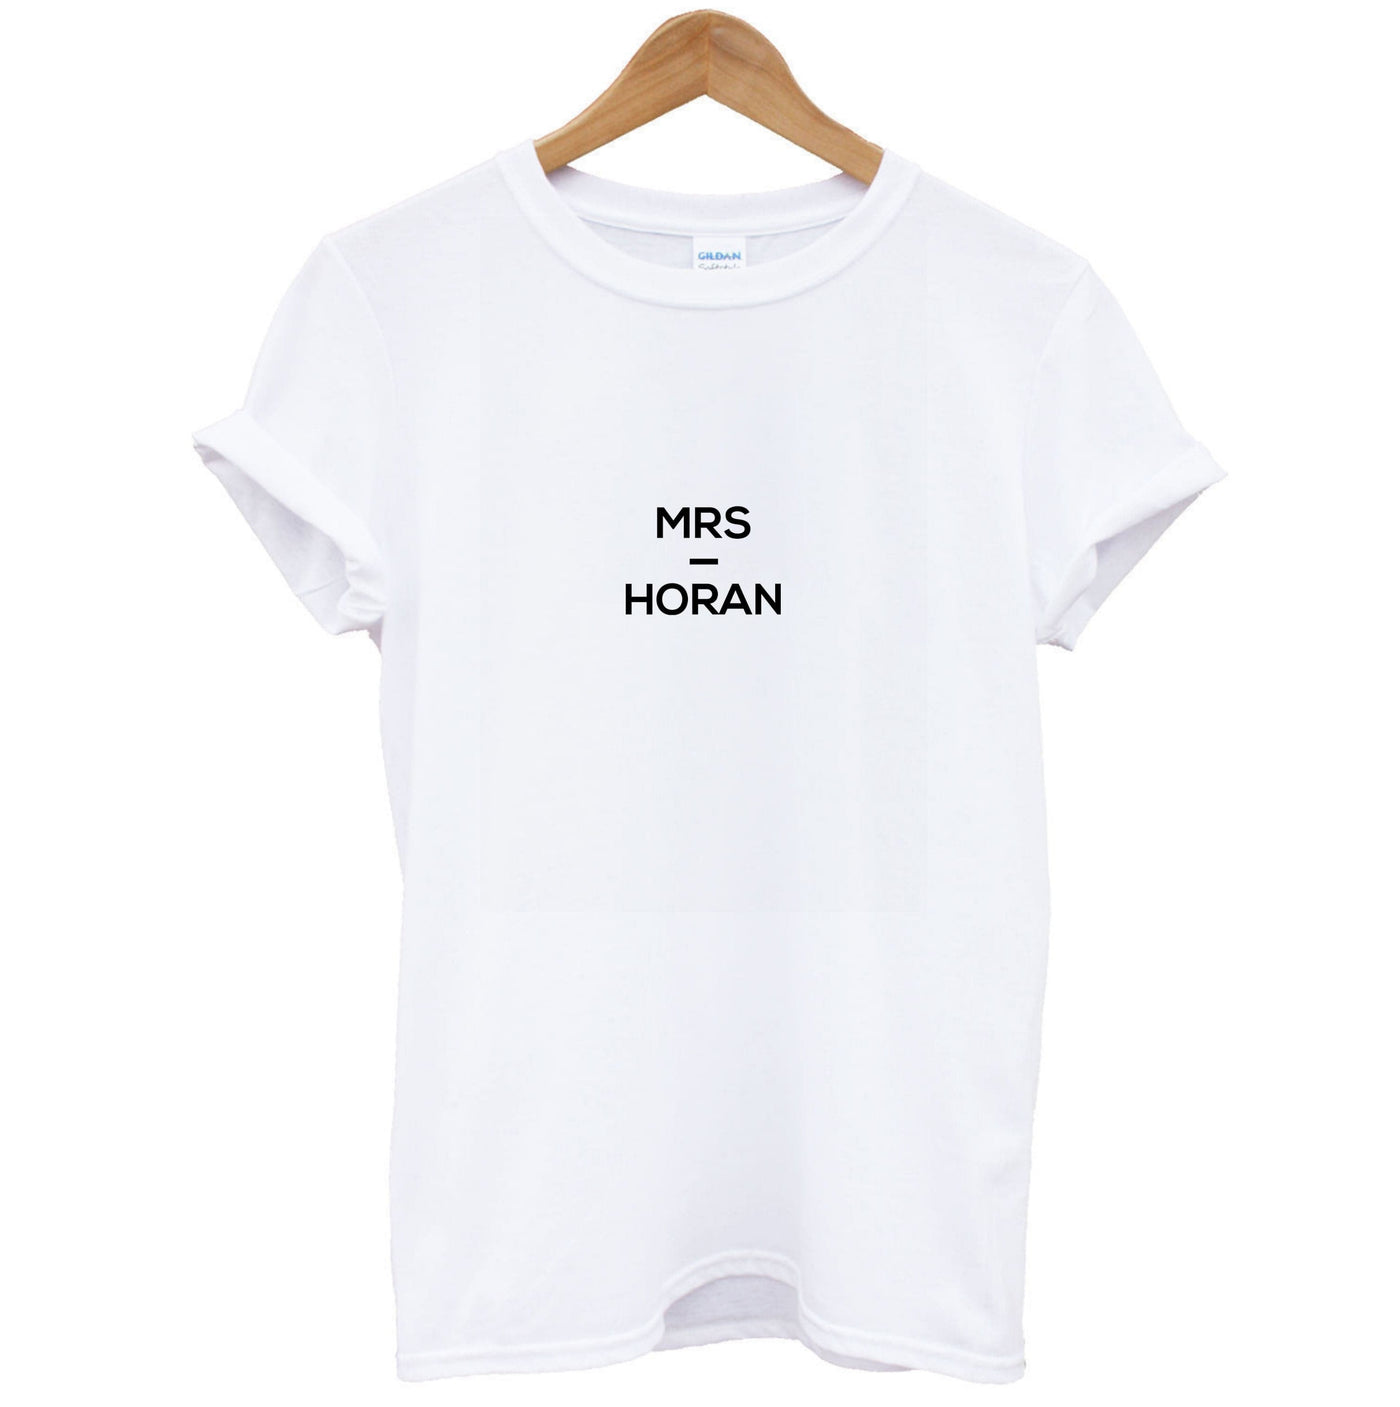 Mrs Horan - Niall Horan T-Shirt